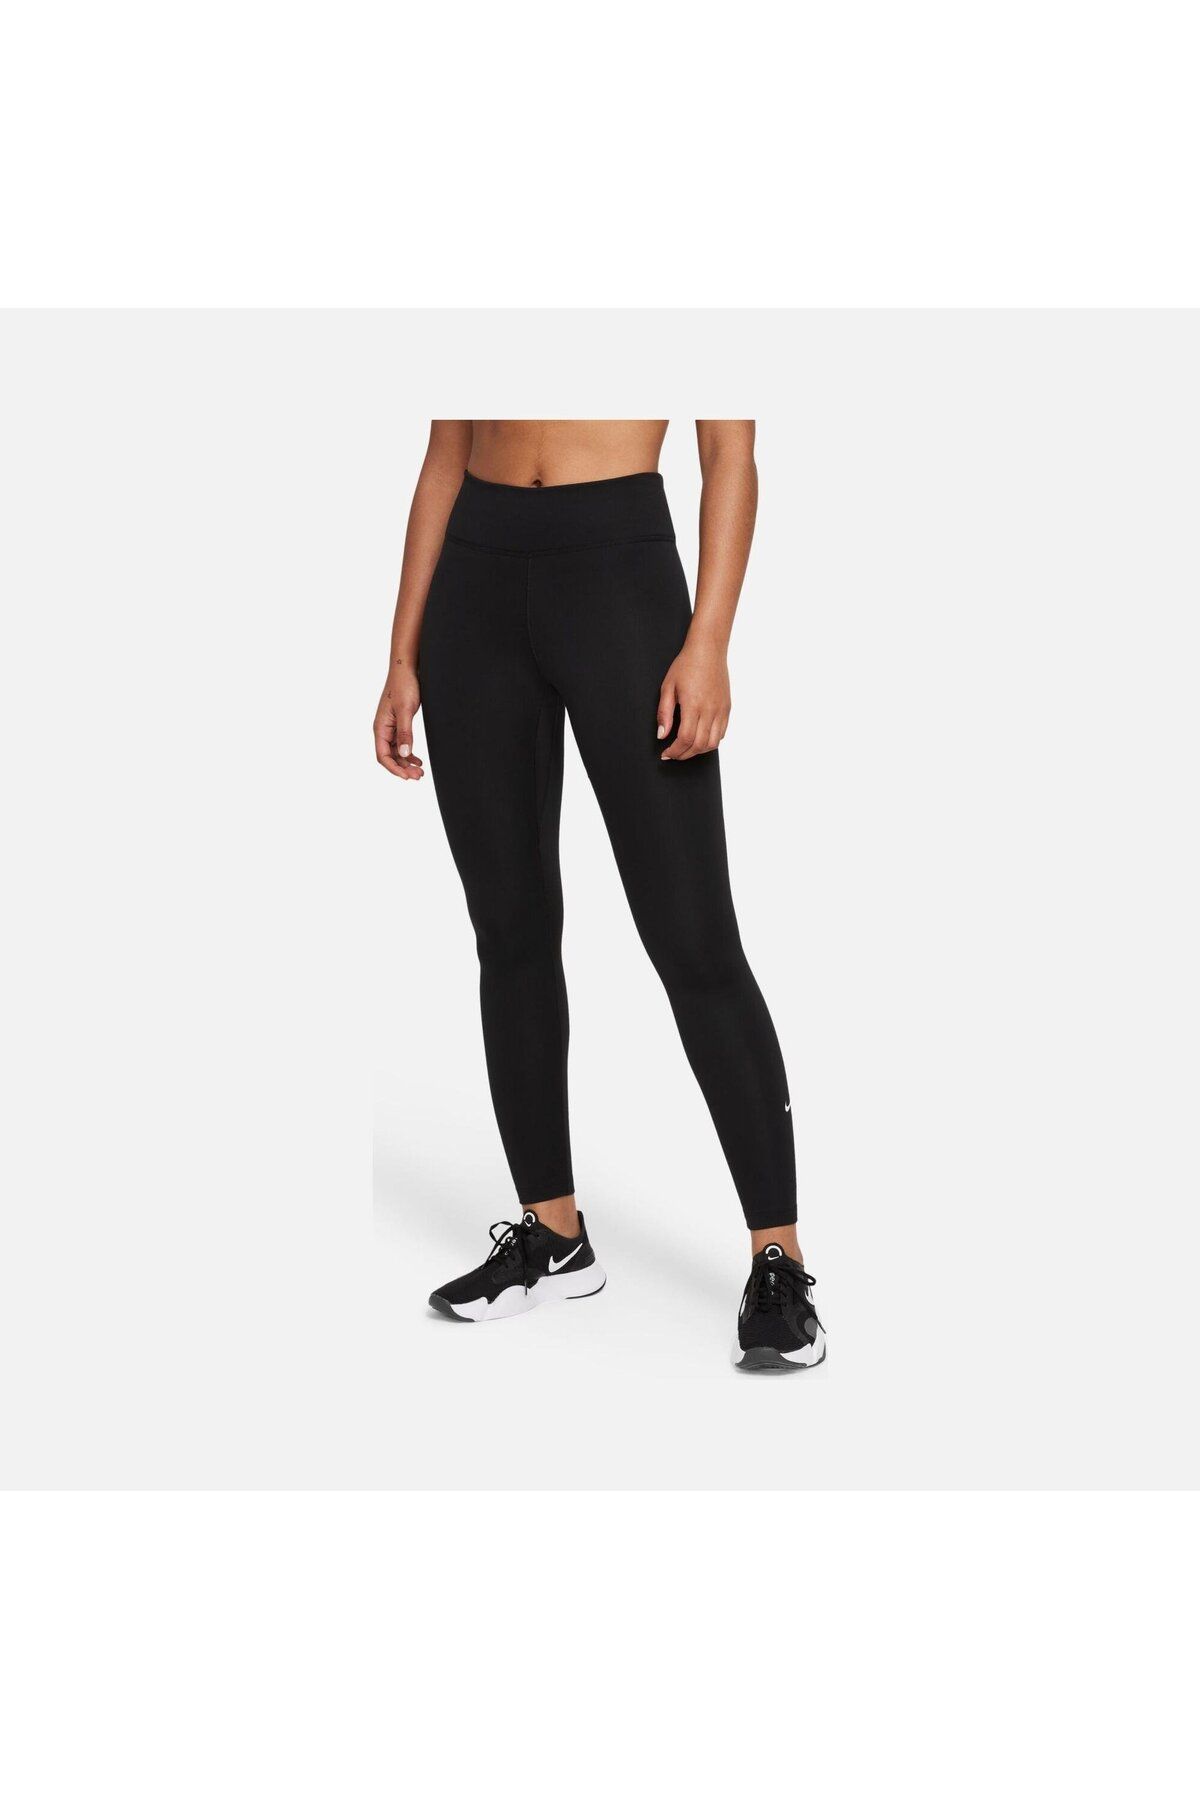 Nike Sports Leggings - Black - Normal Waist